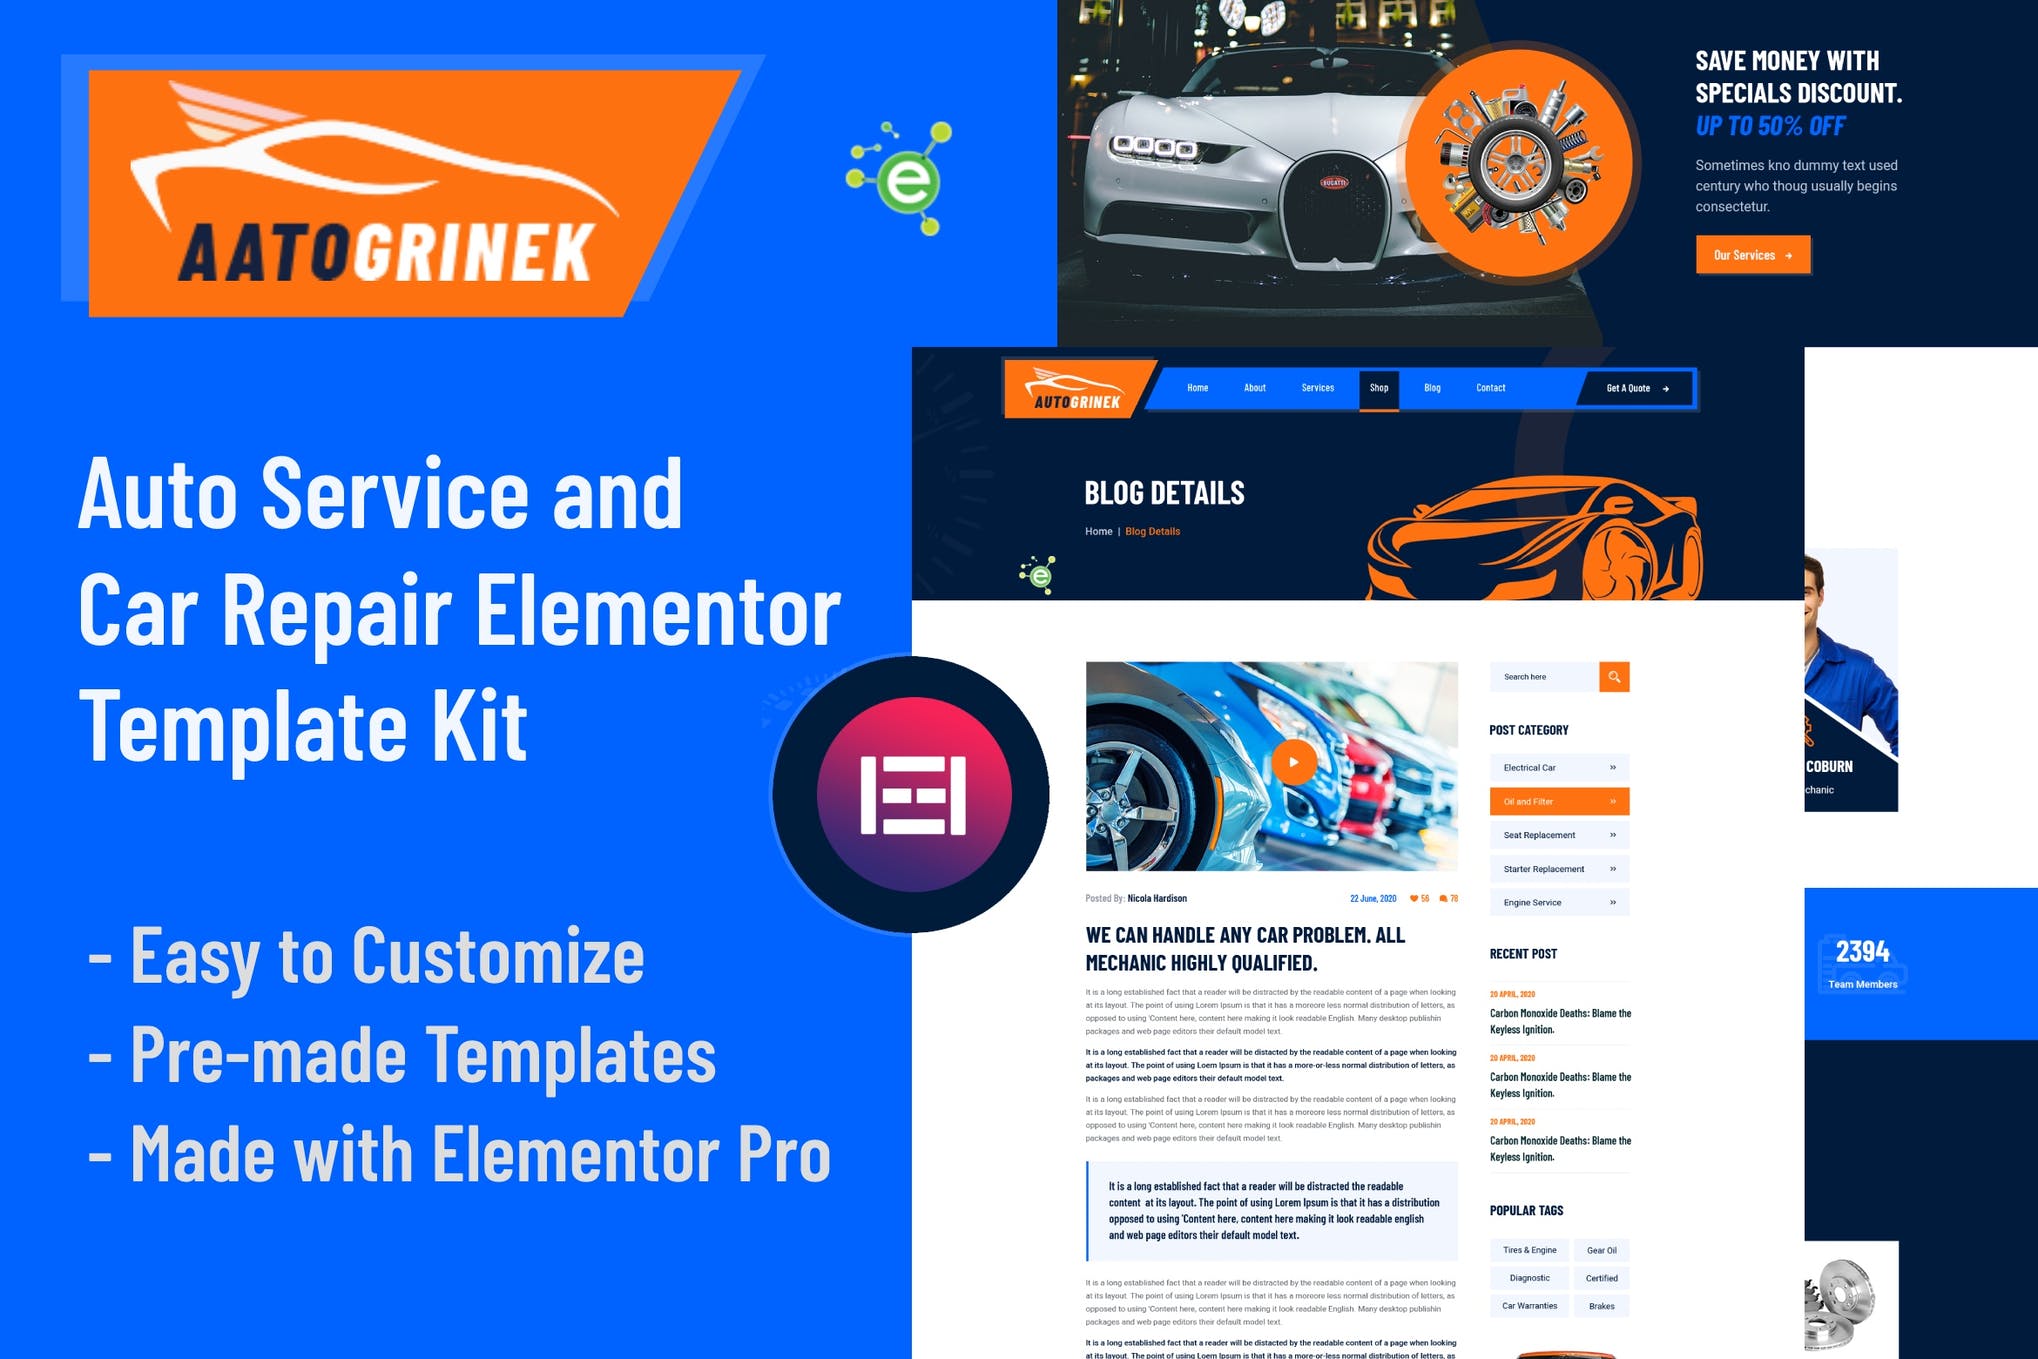 Aatogrinek - Auto Service - Car Repair Elementor Template Kit